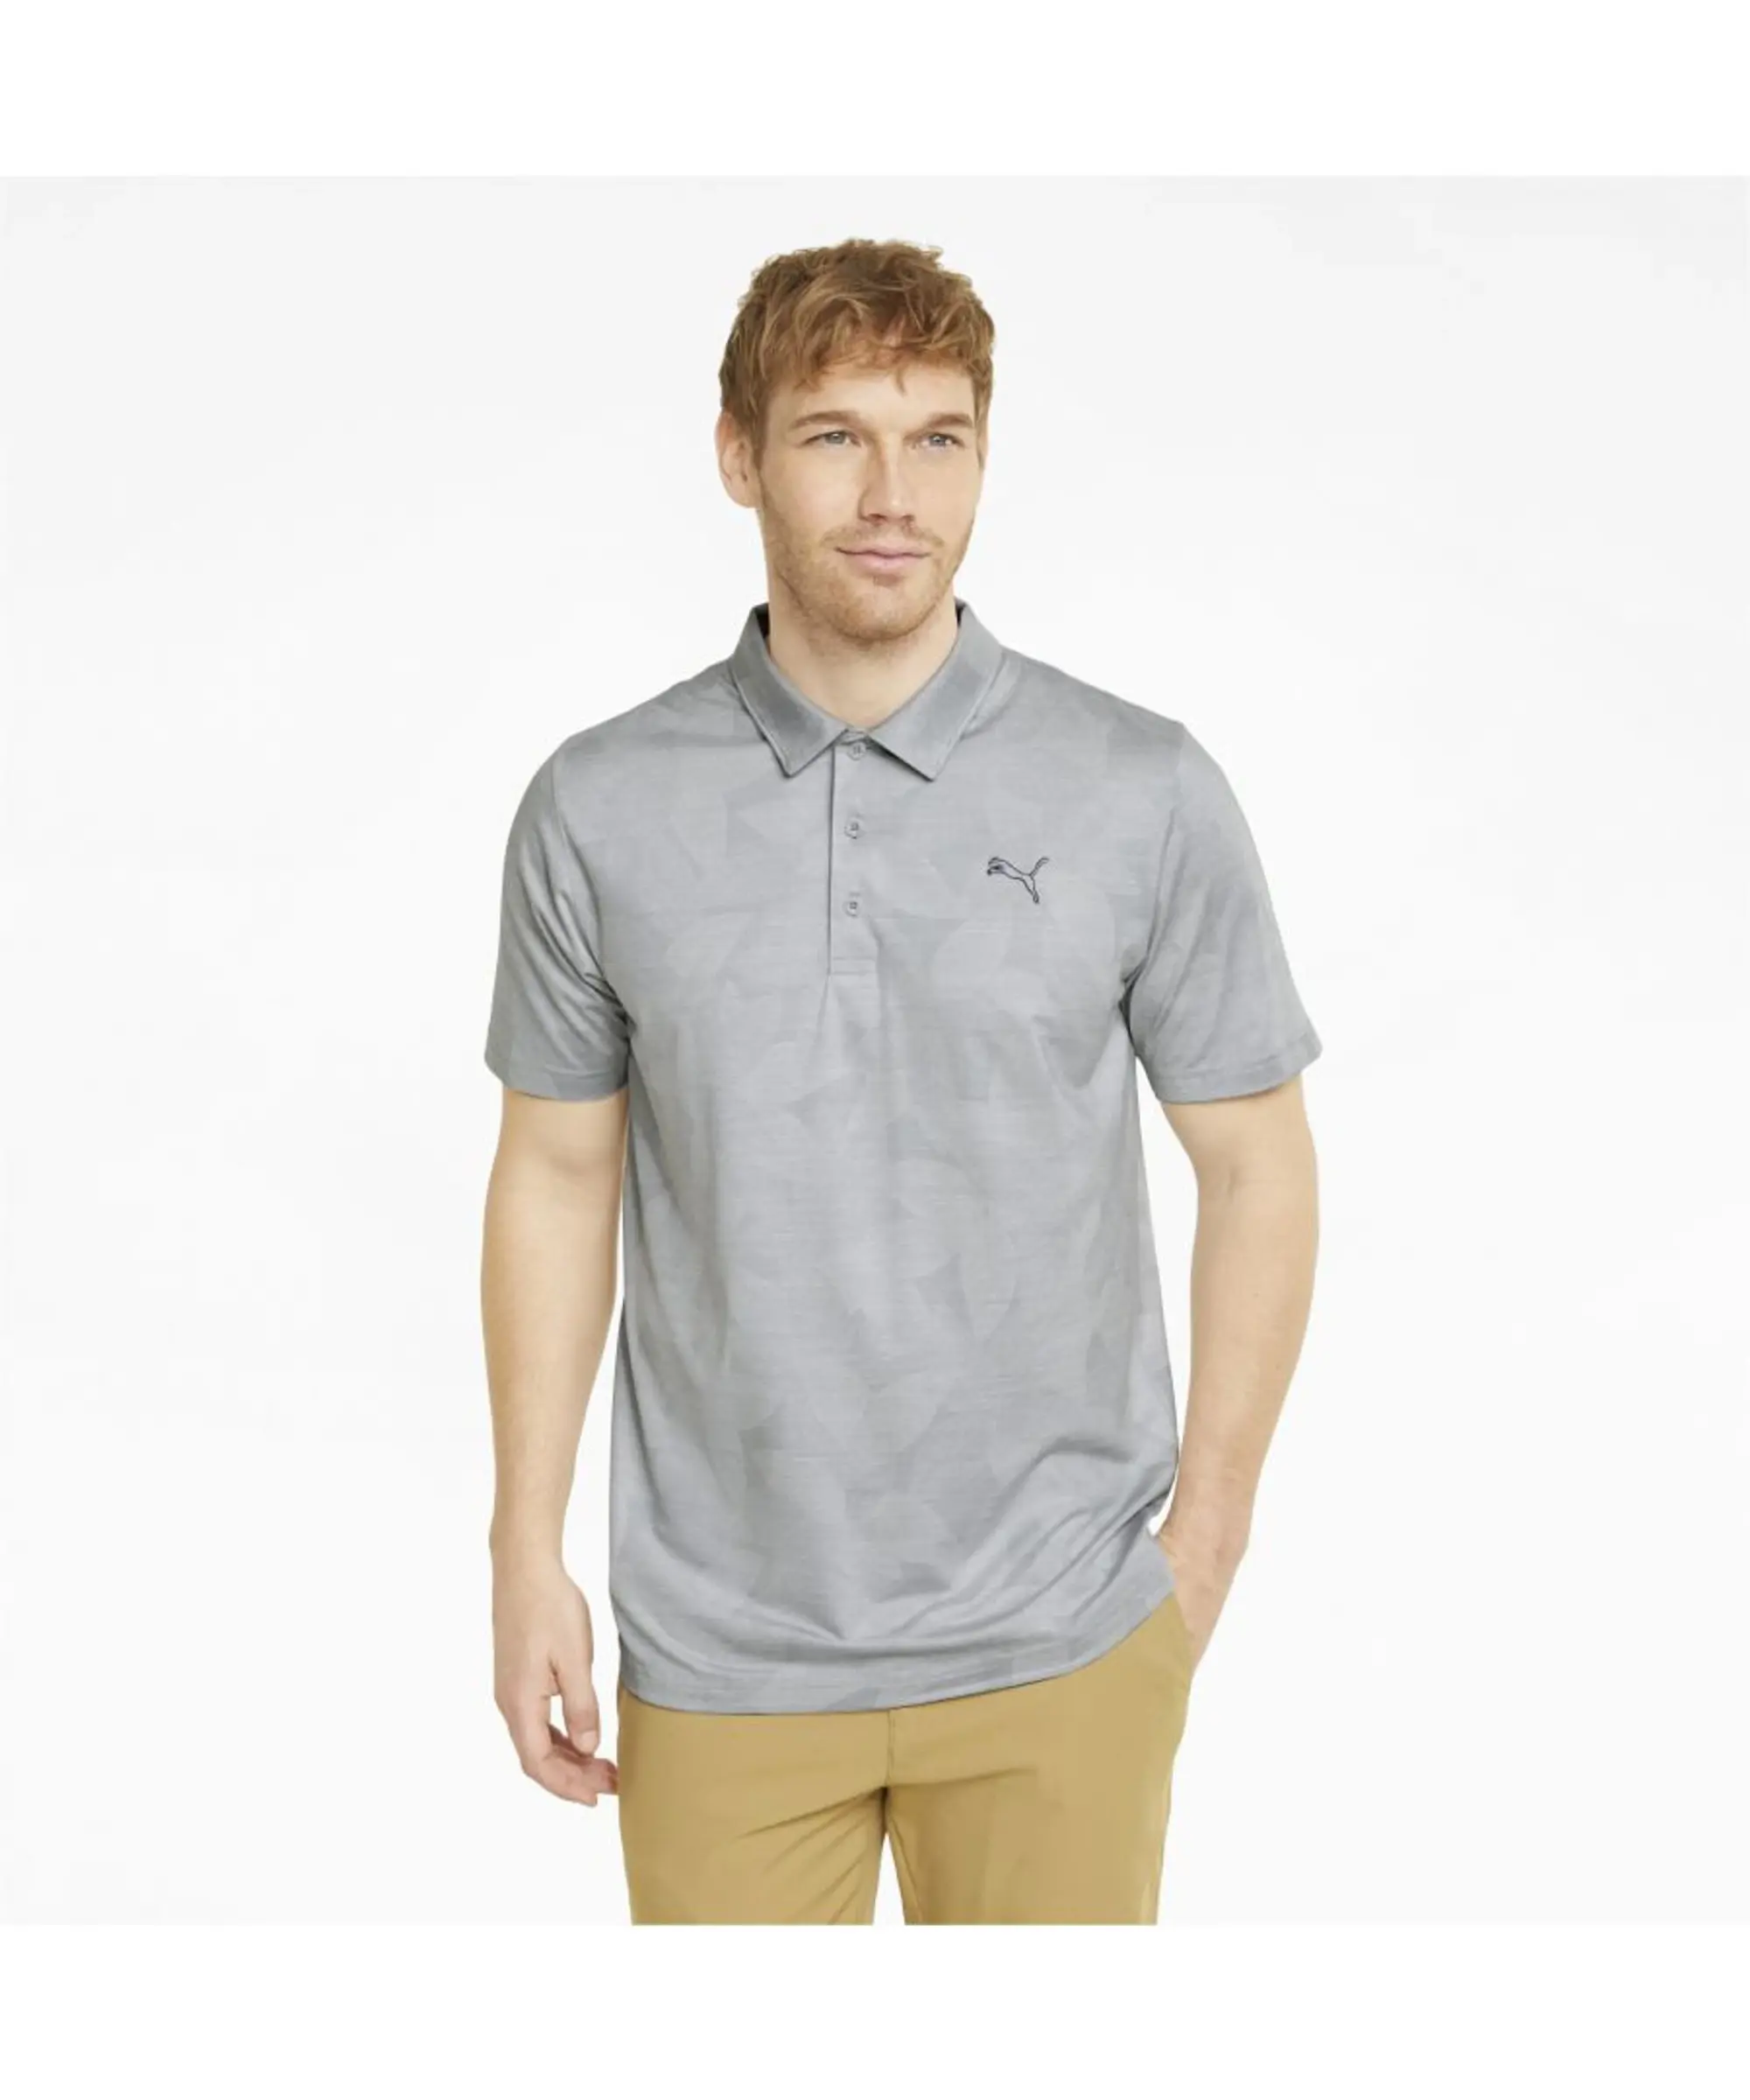 Puma Cloudspun Polo Shirt Mens - Grey